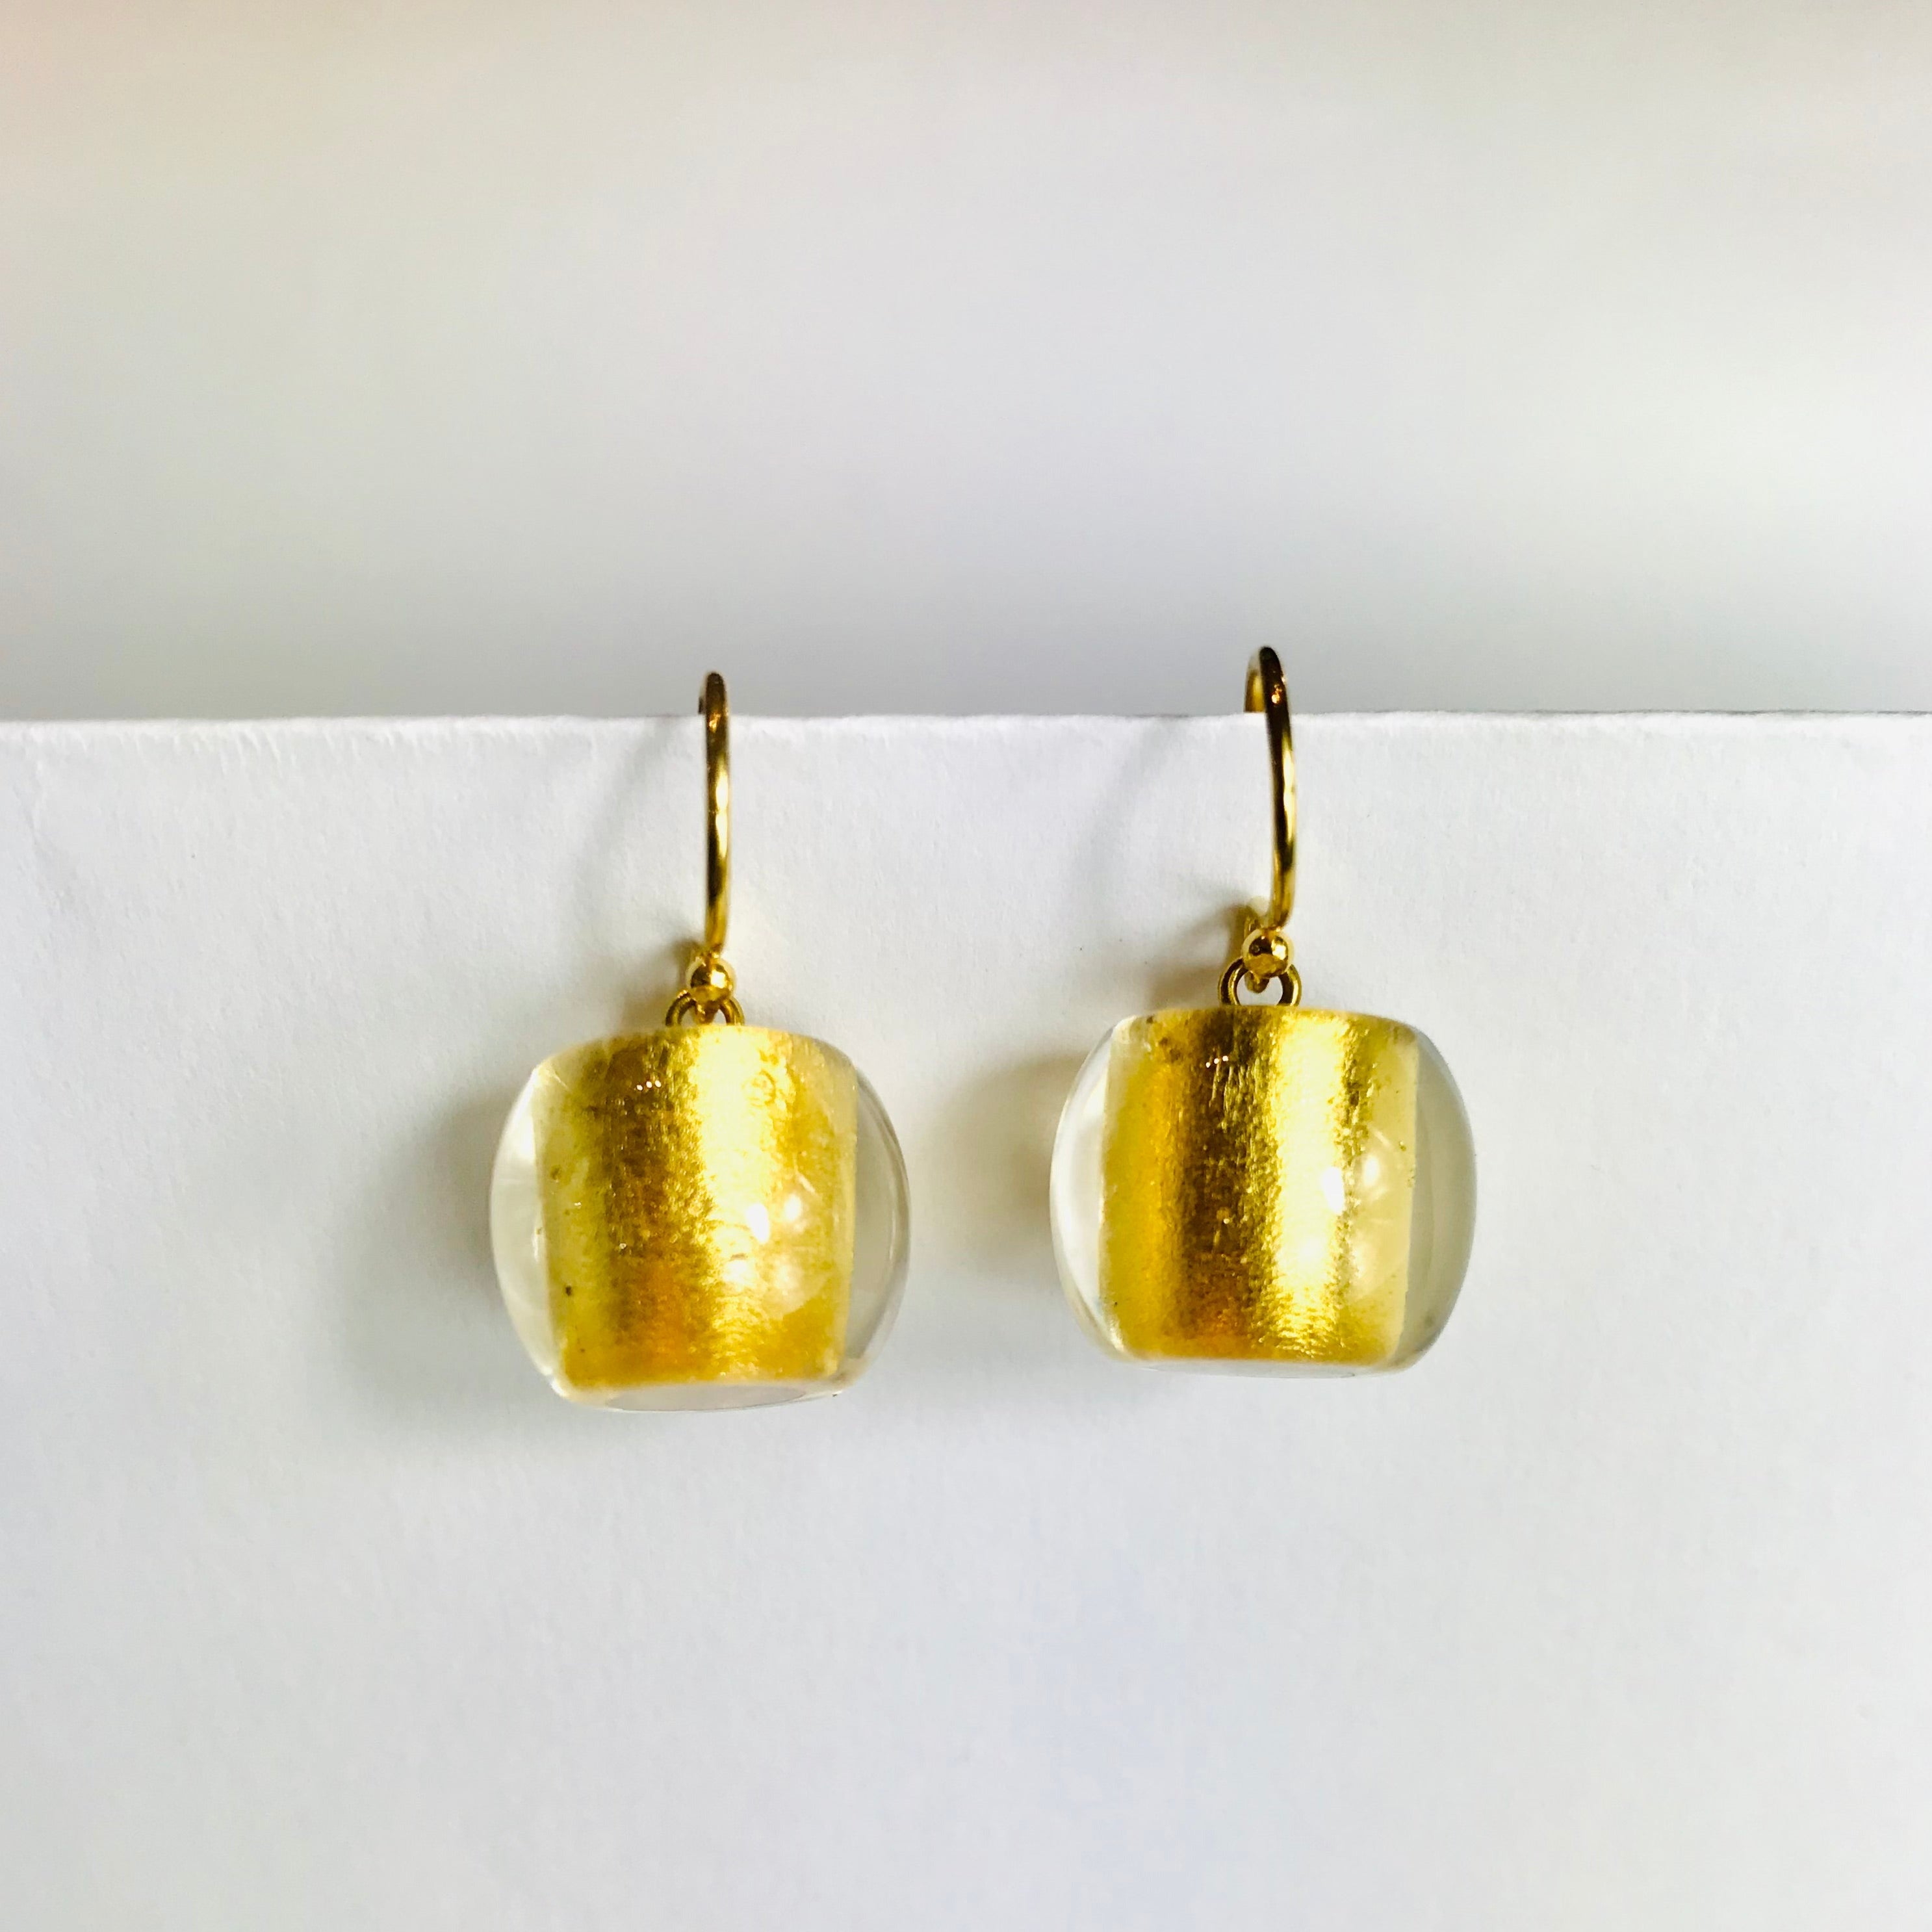 Gold Foil Earrings - The Nancy Smillie Shop - Art, Jewellery & Designer Gifts Glasgow